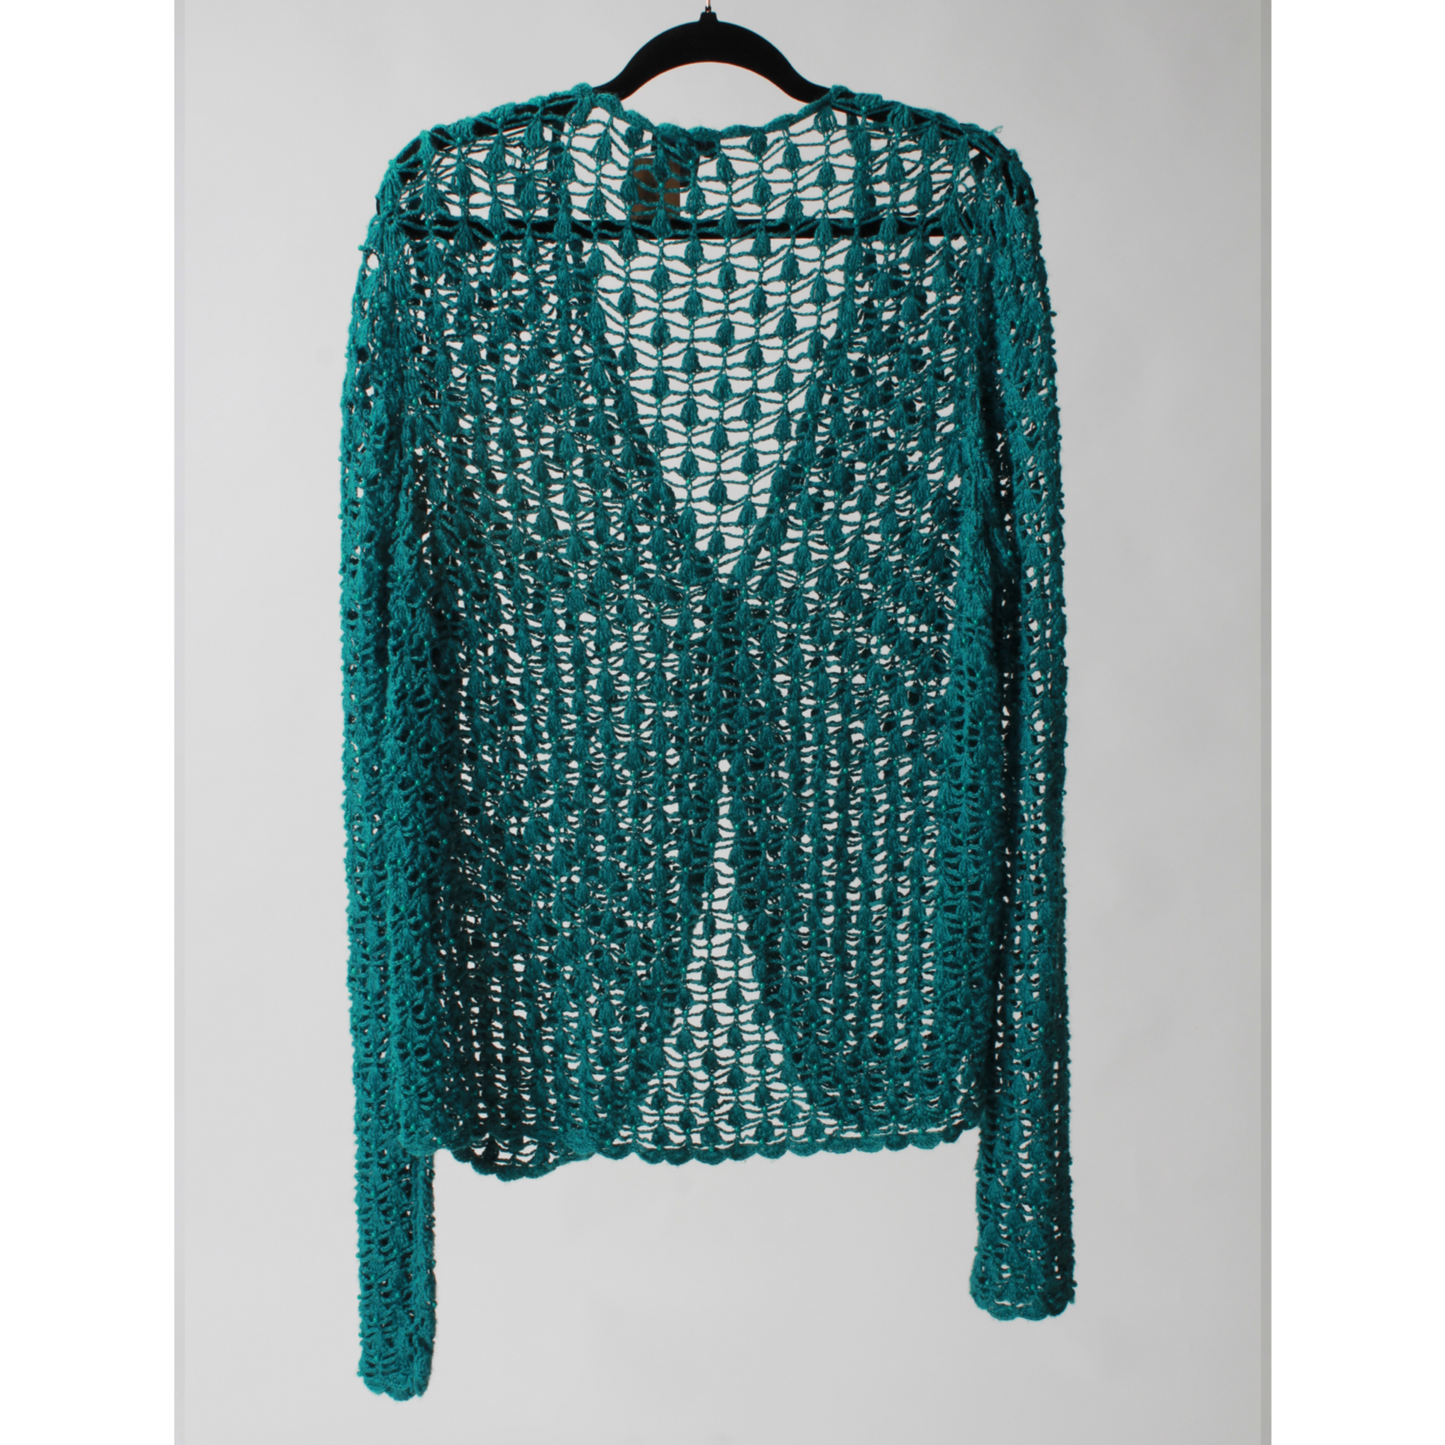 Beaded Knit Cardigan (XL)